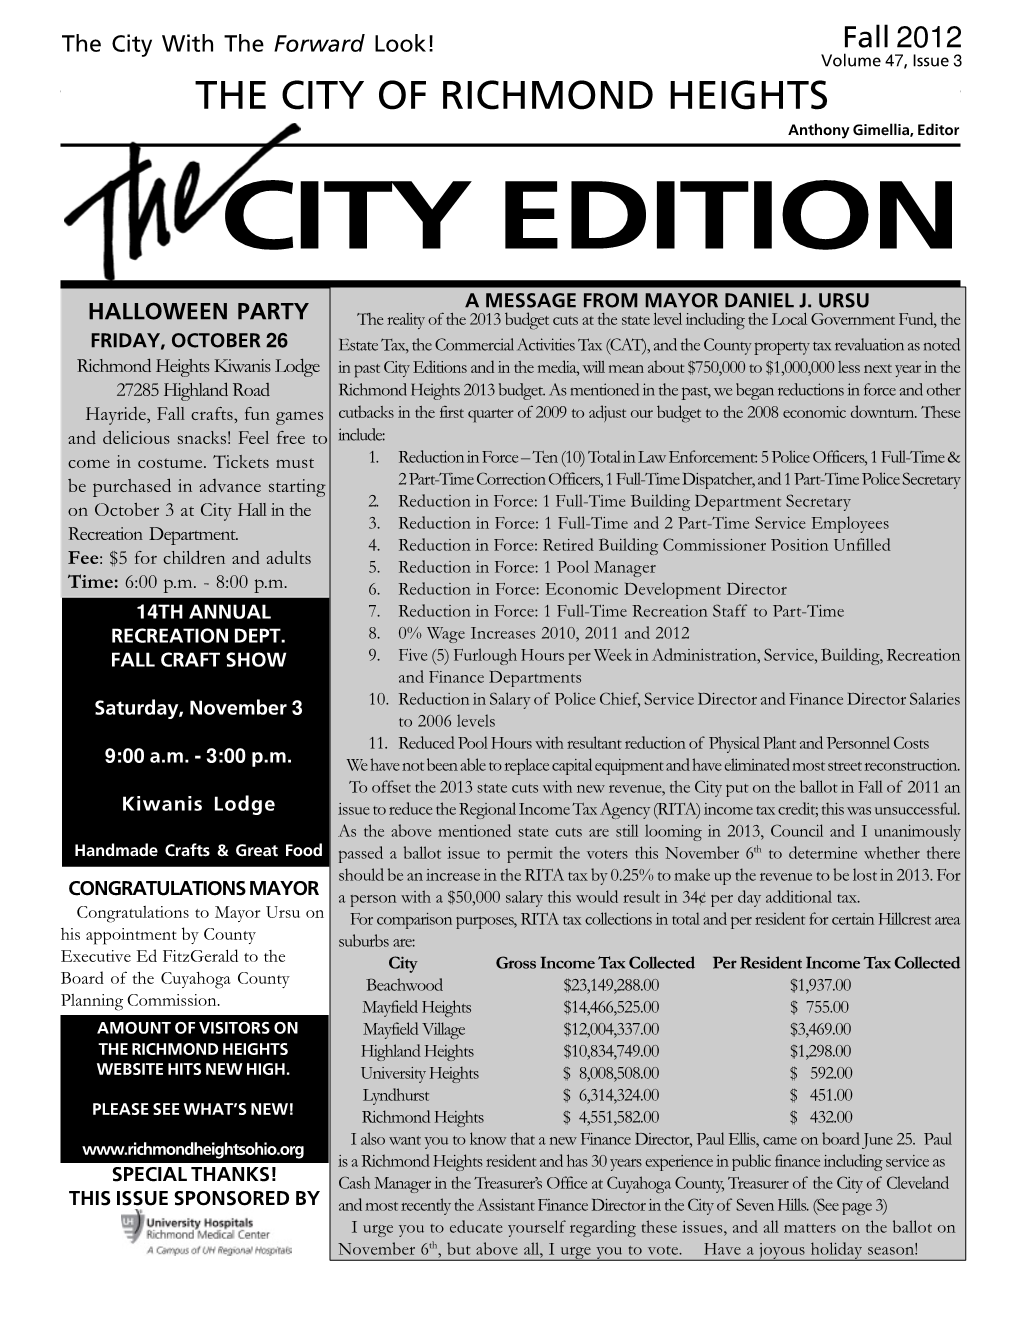 Copy of City Edition Fall 2011.P65